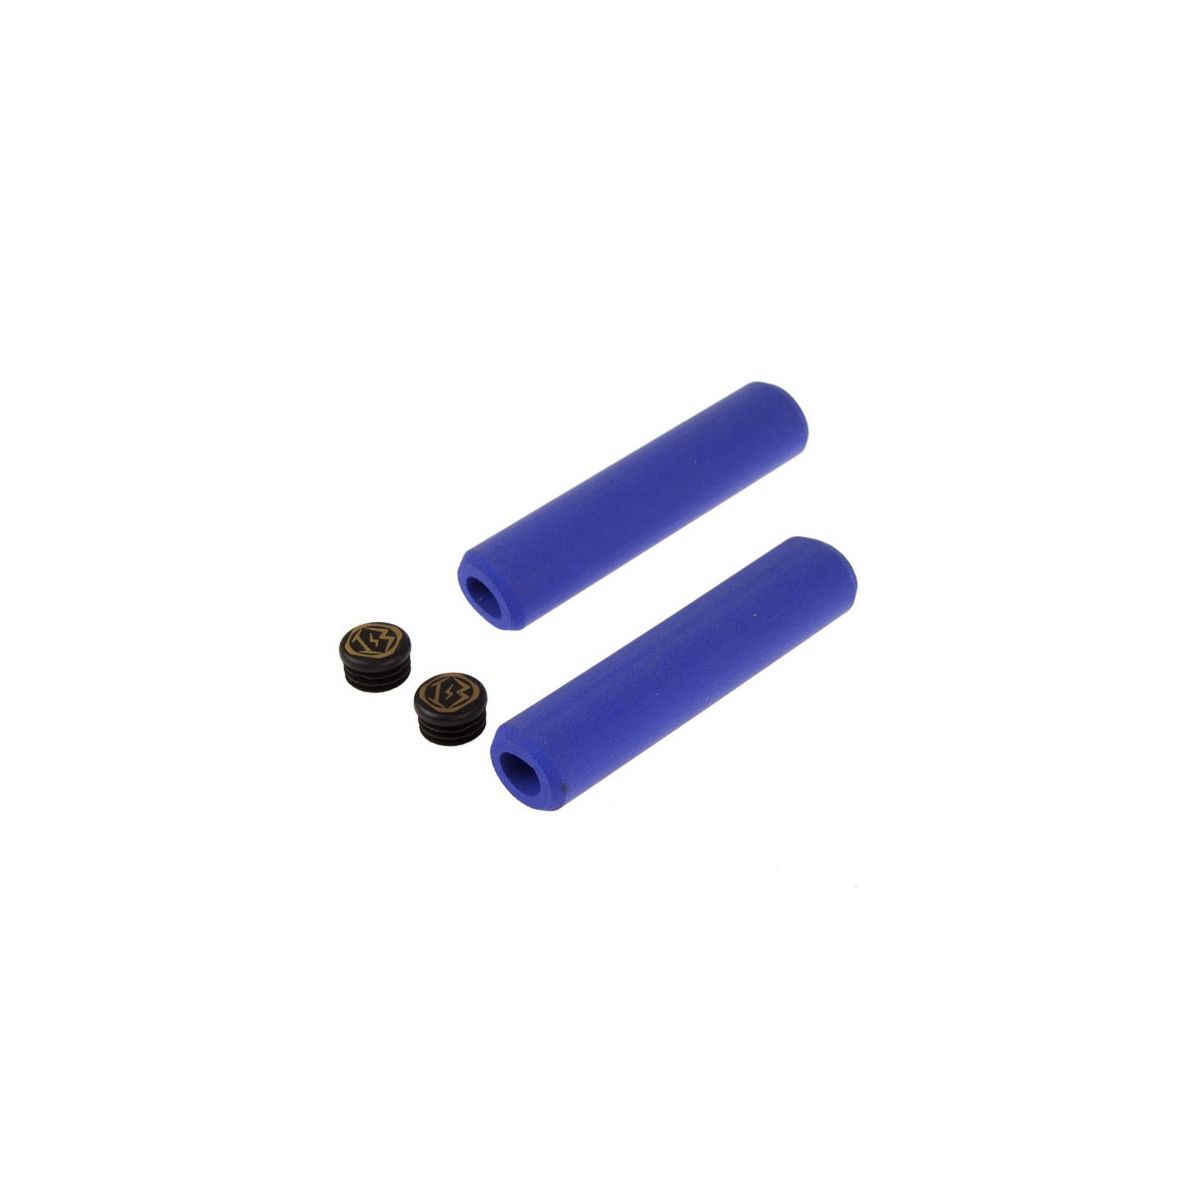 Puños Esigrips Chunky de siliciona en color azul